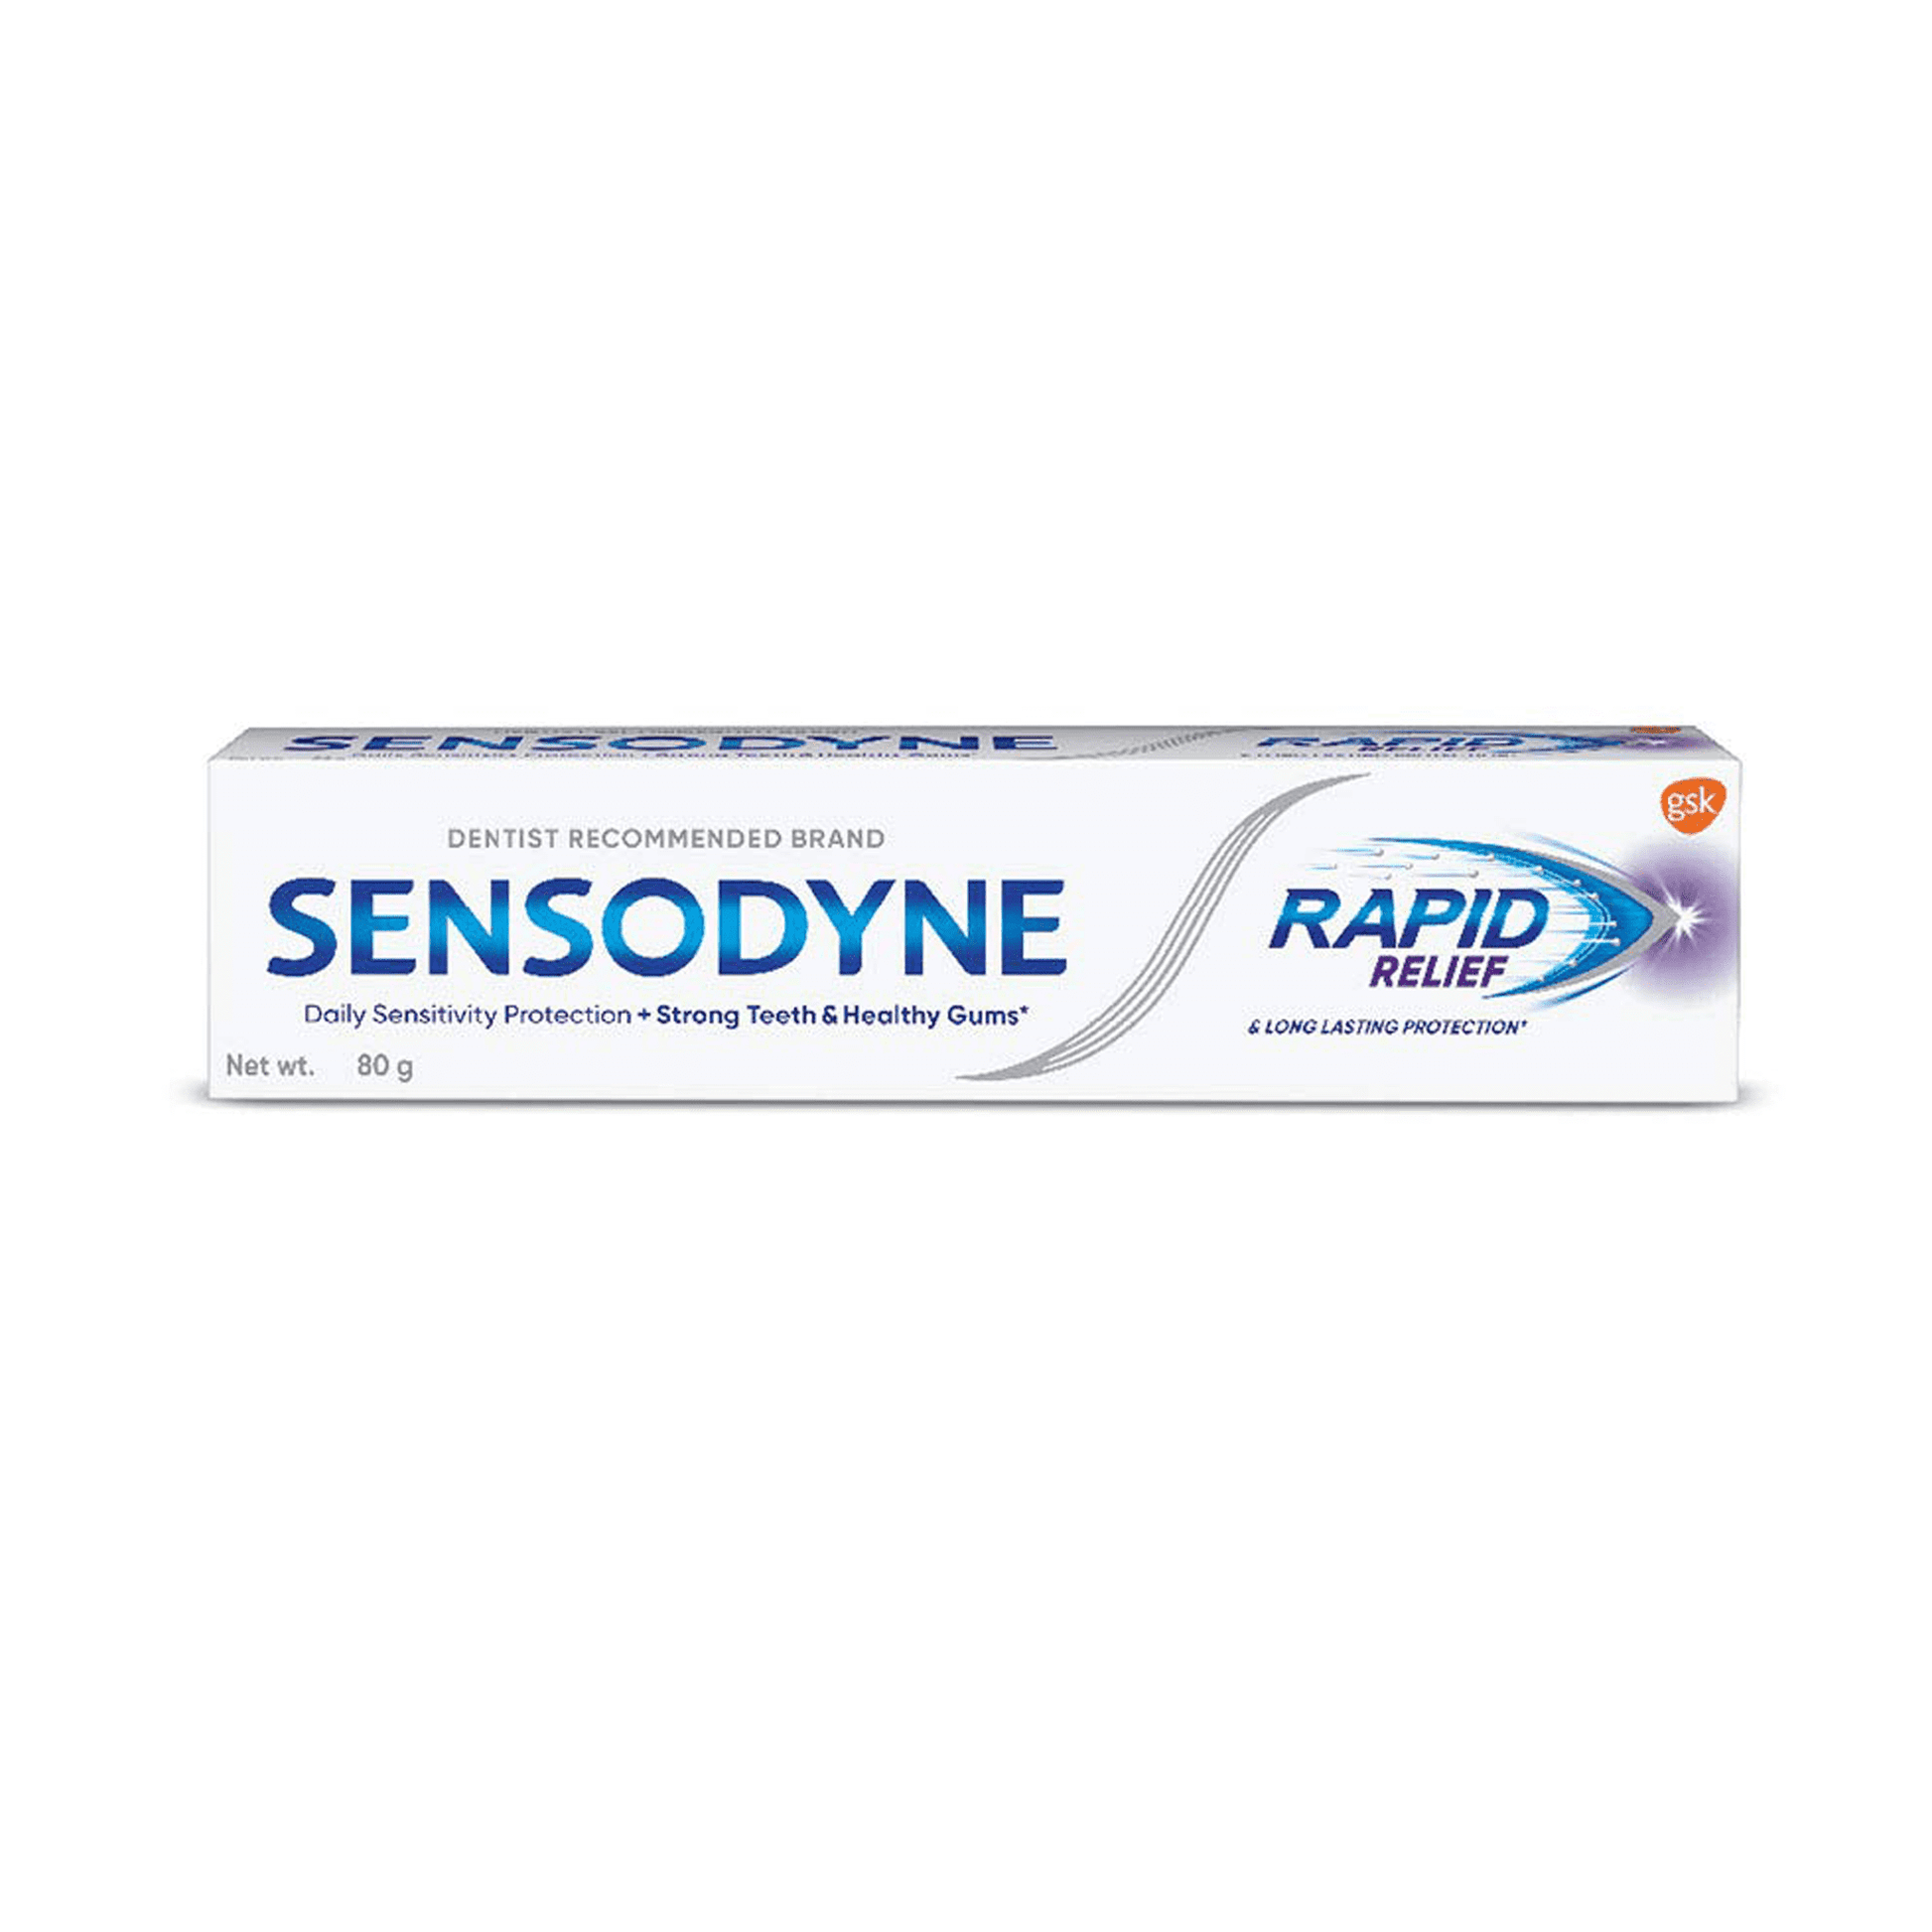 Sensodyne Rapid Relief Sensitive Tooth Paste.